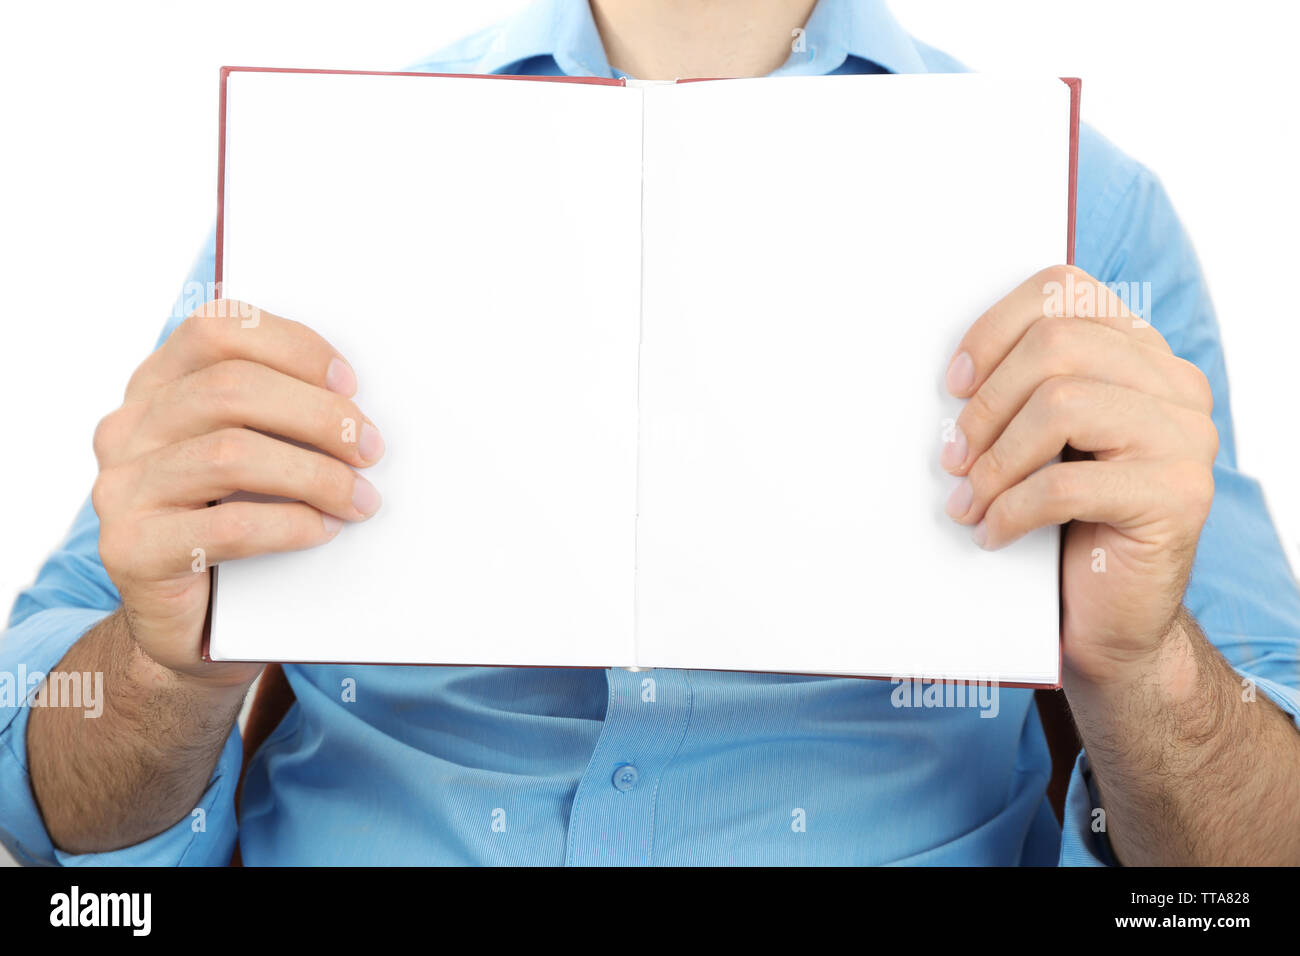 Man holding book close up Stock Photo